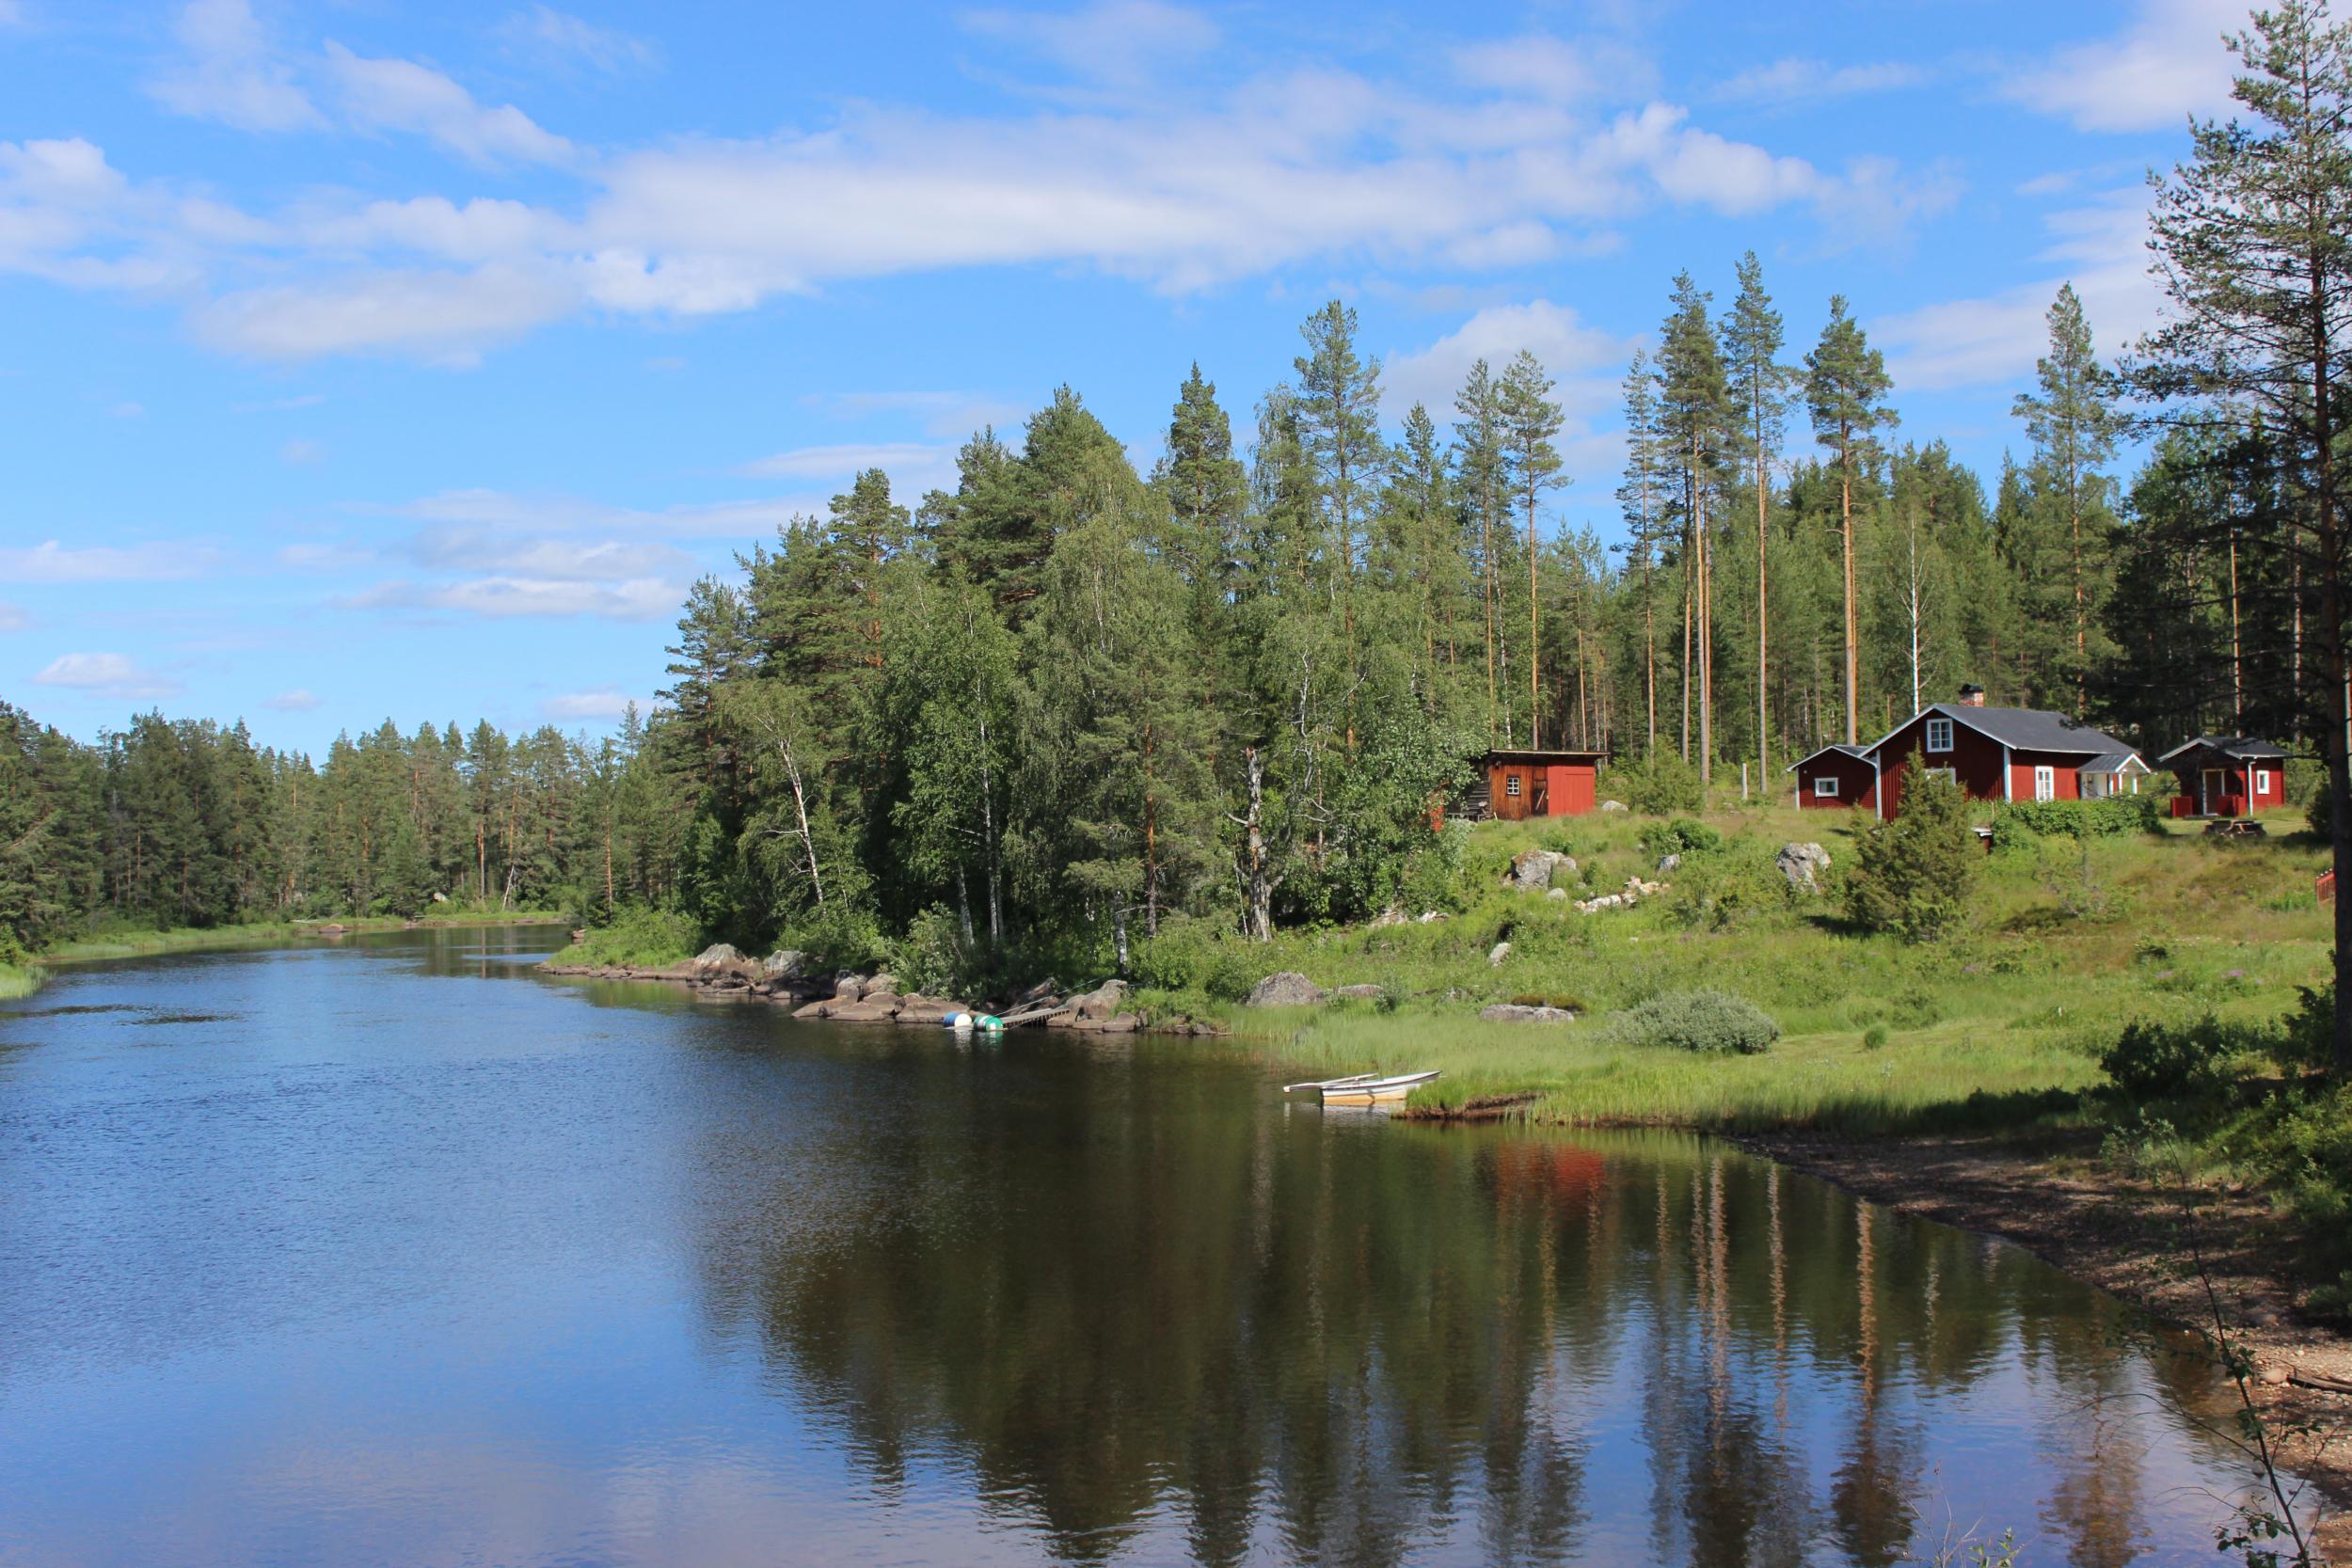 Falu-red huts by the lake in Dalarna County